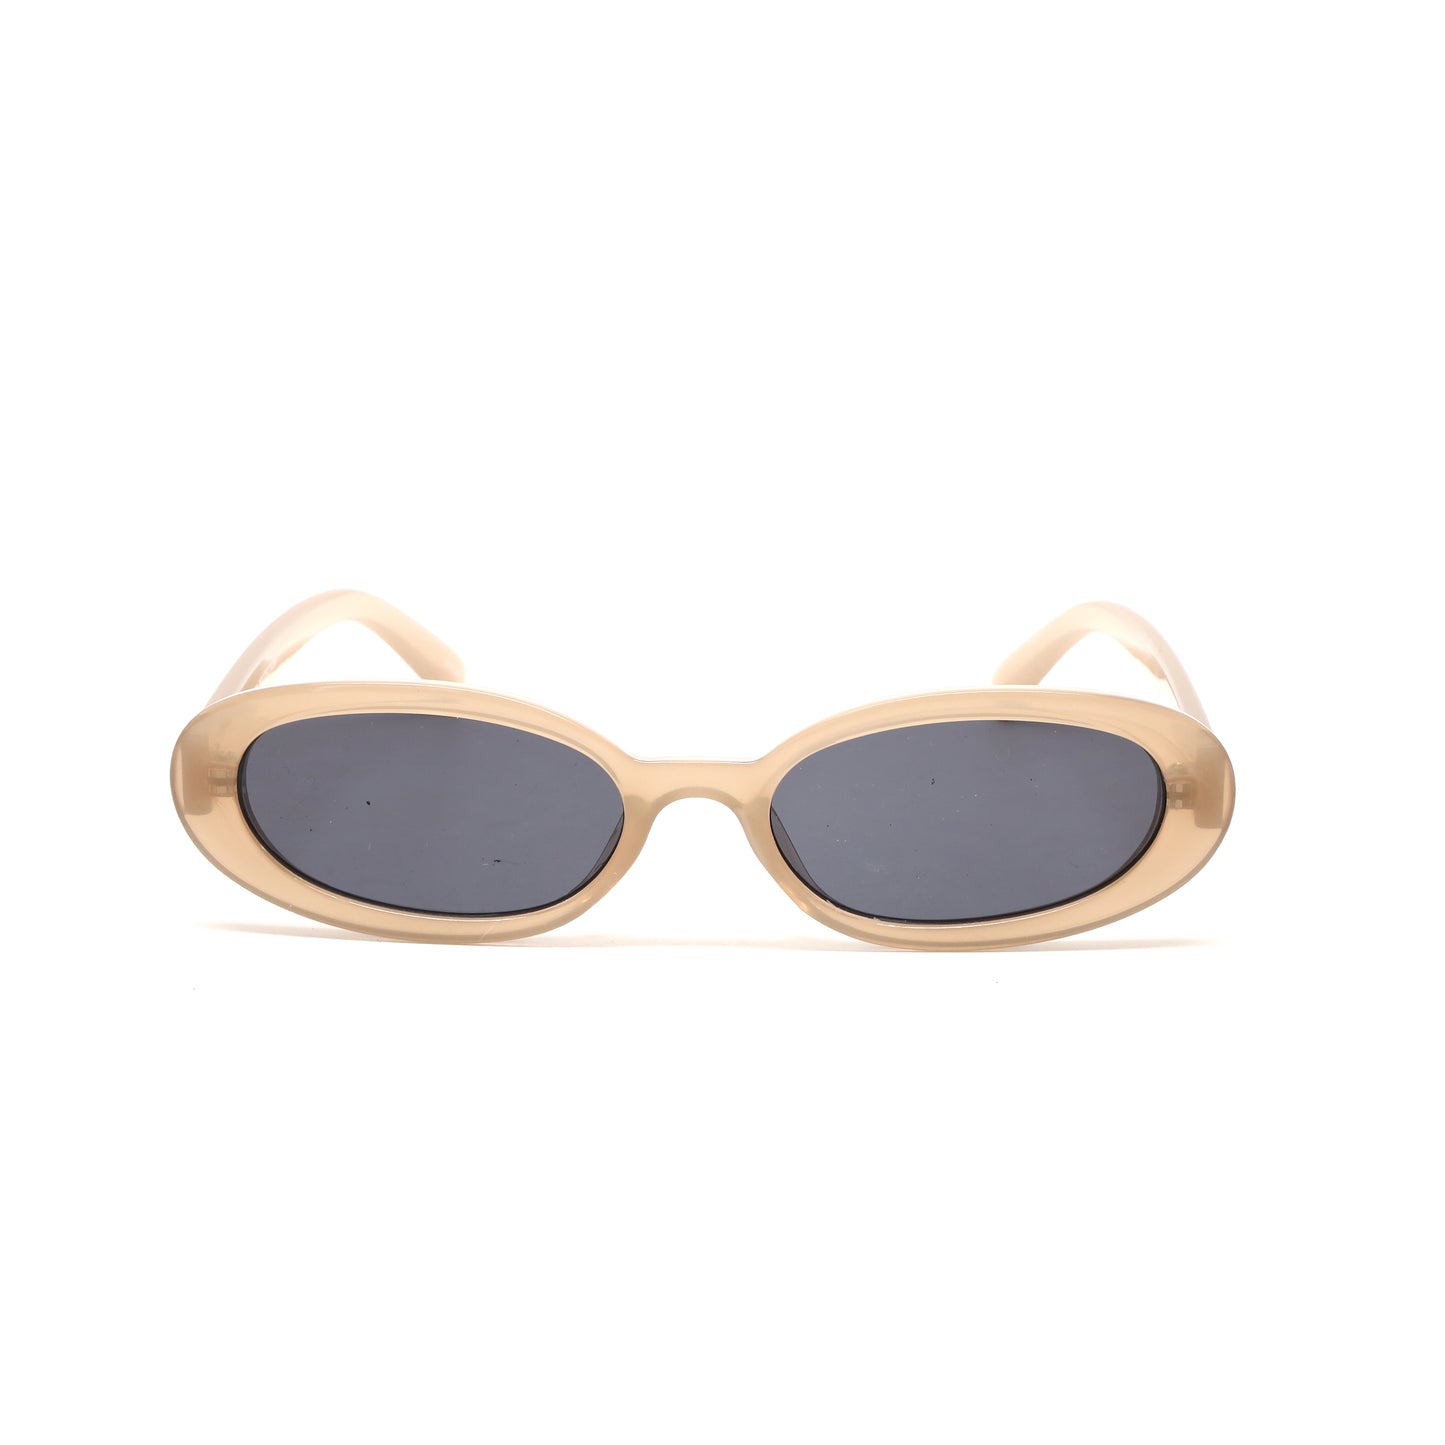 Retro Modern Standard Oval Frame Sunglasses - Tan